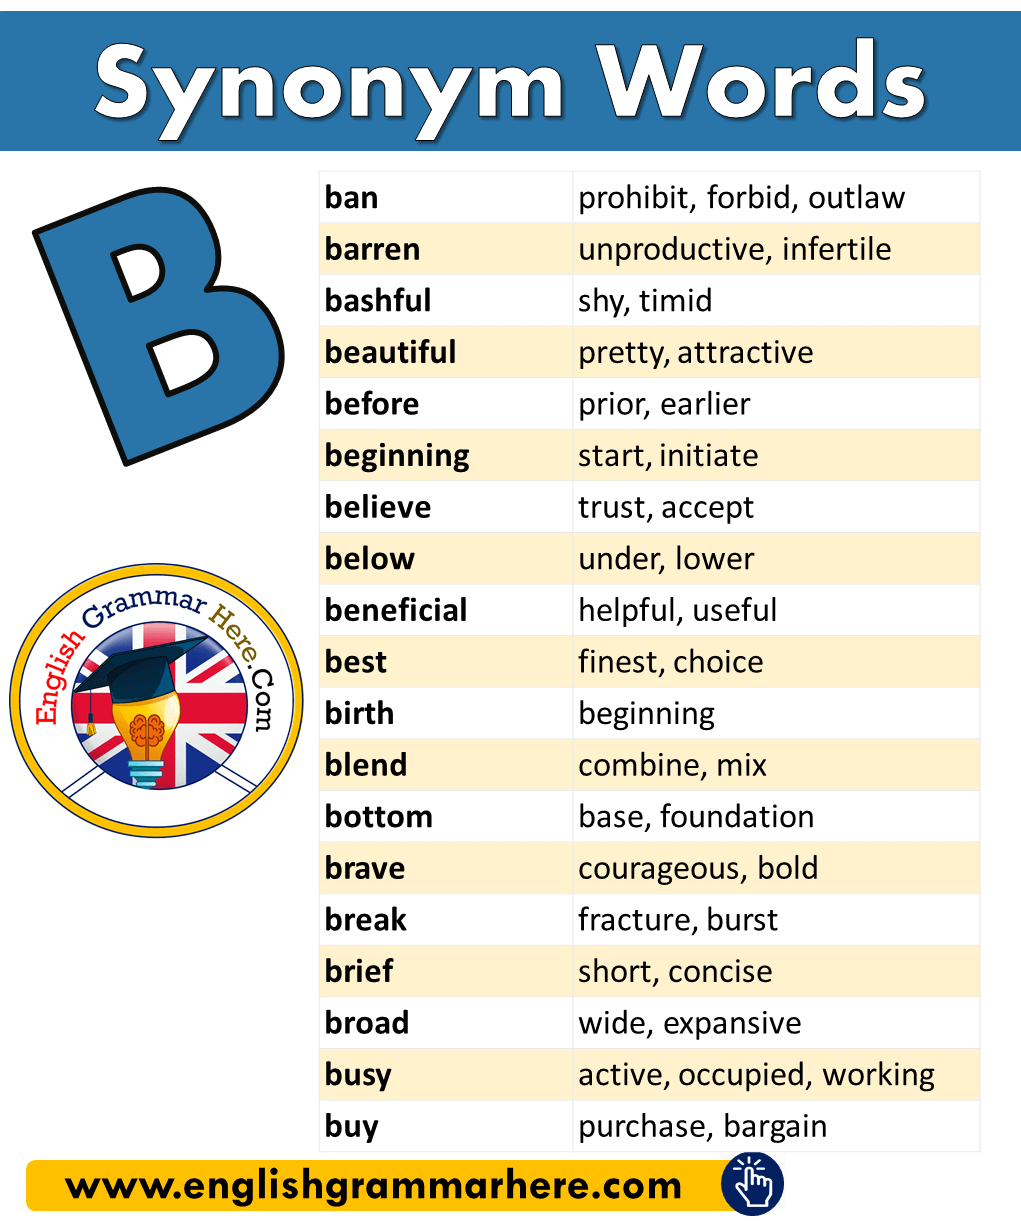 Synonym Vocabulary in english, Synonym Words with B in English